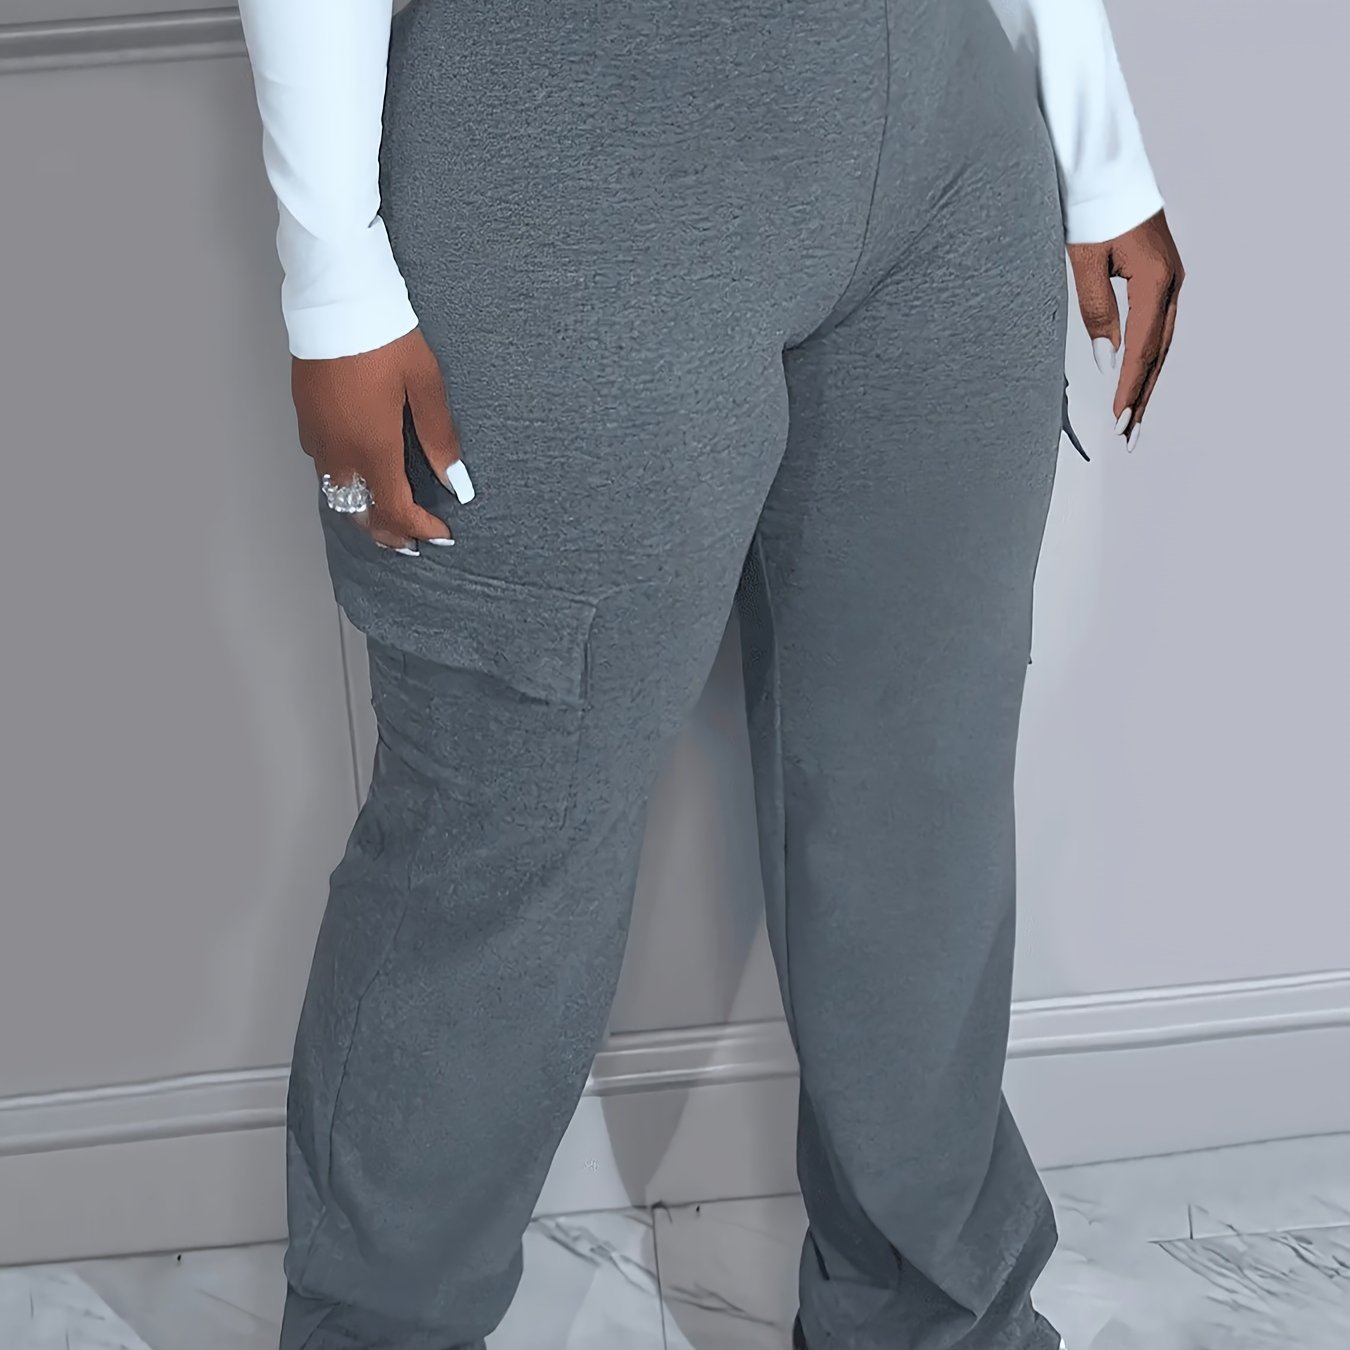 Tawop Fashion Women Plus Size Solid Hollow Elastic Waist Casual Leggings Pants  Forbidden Pants Father'S Day Pants 